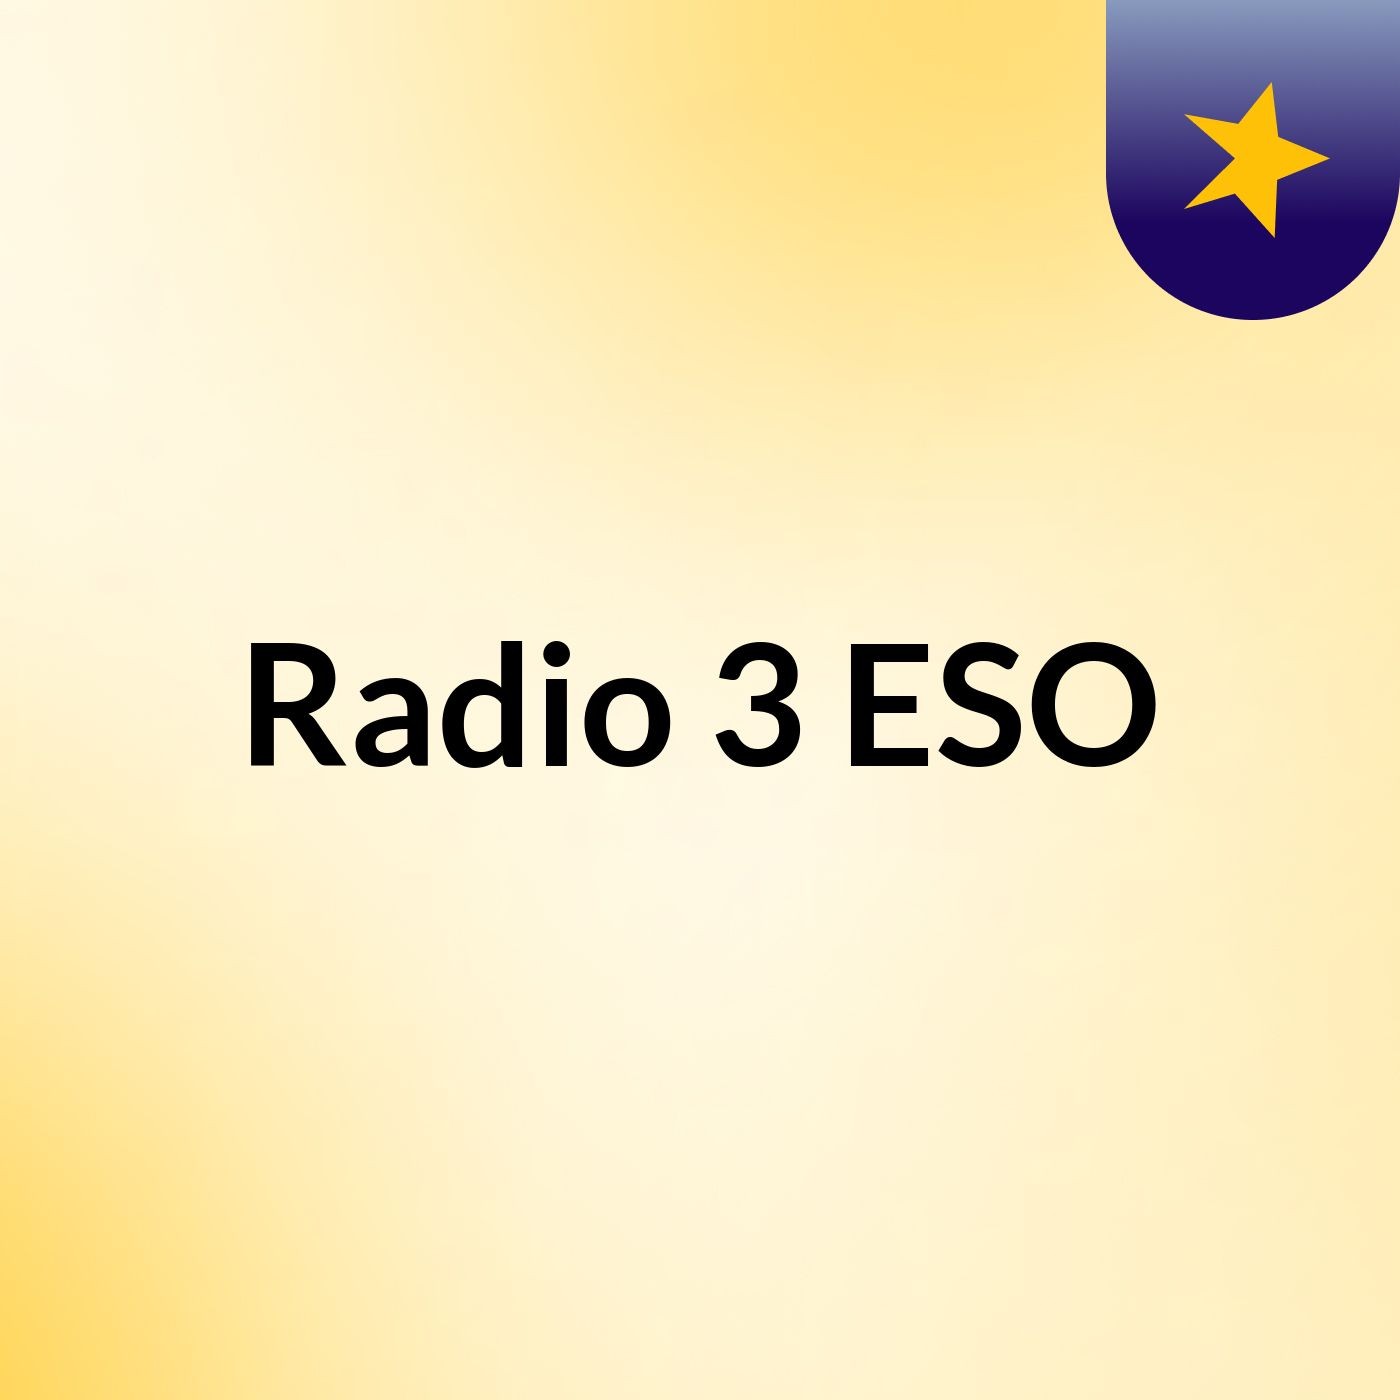 Radio 3 ESO